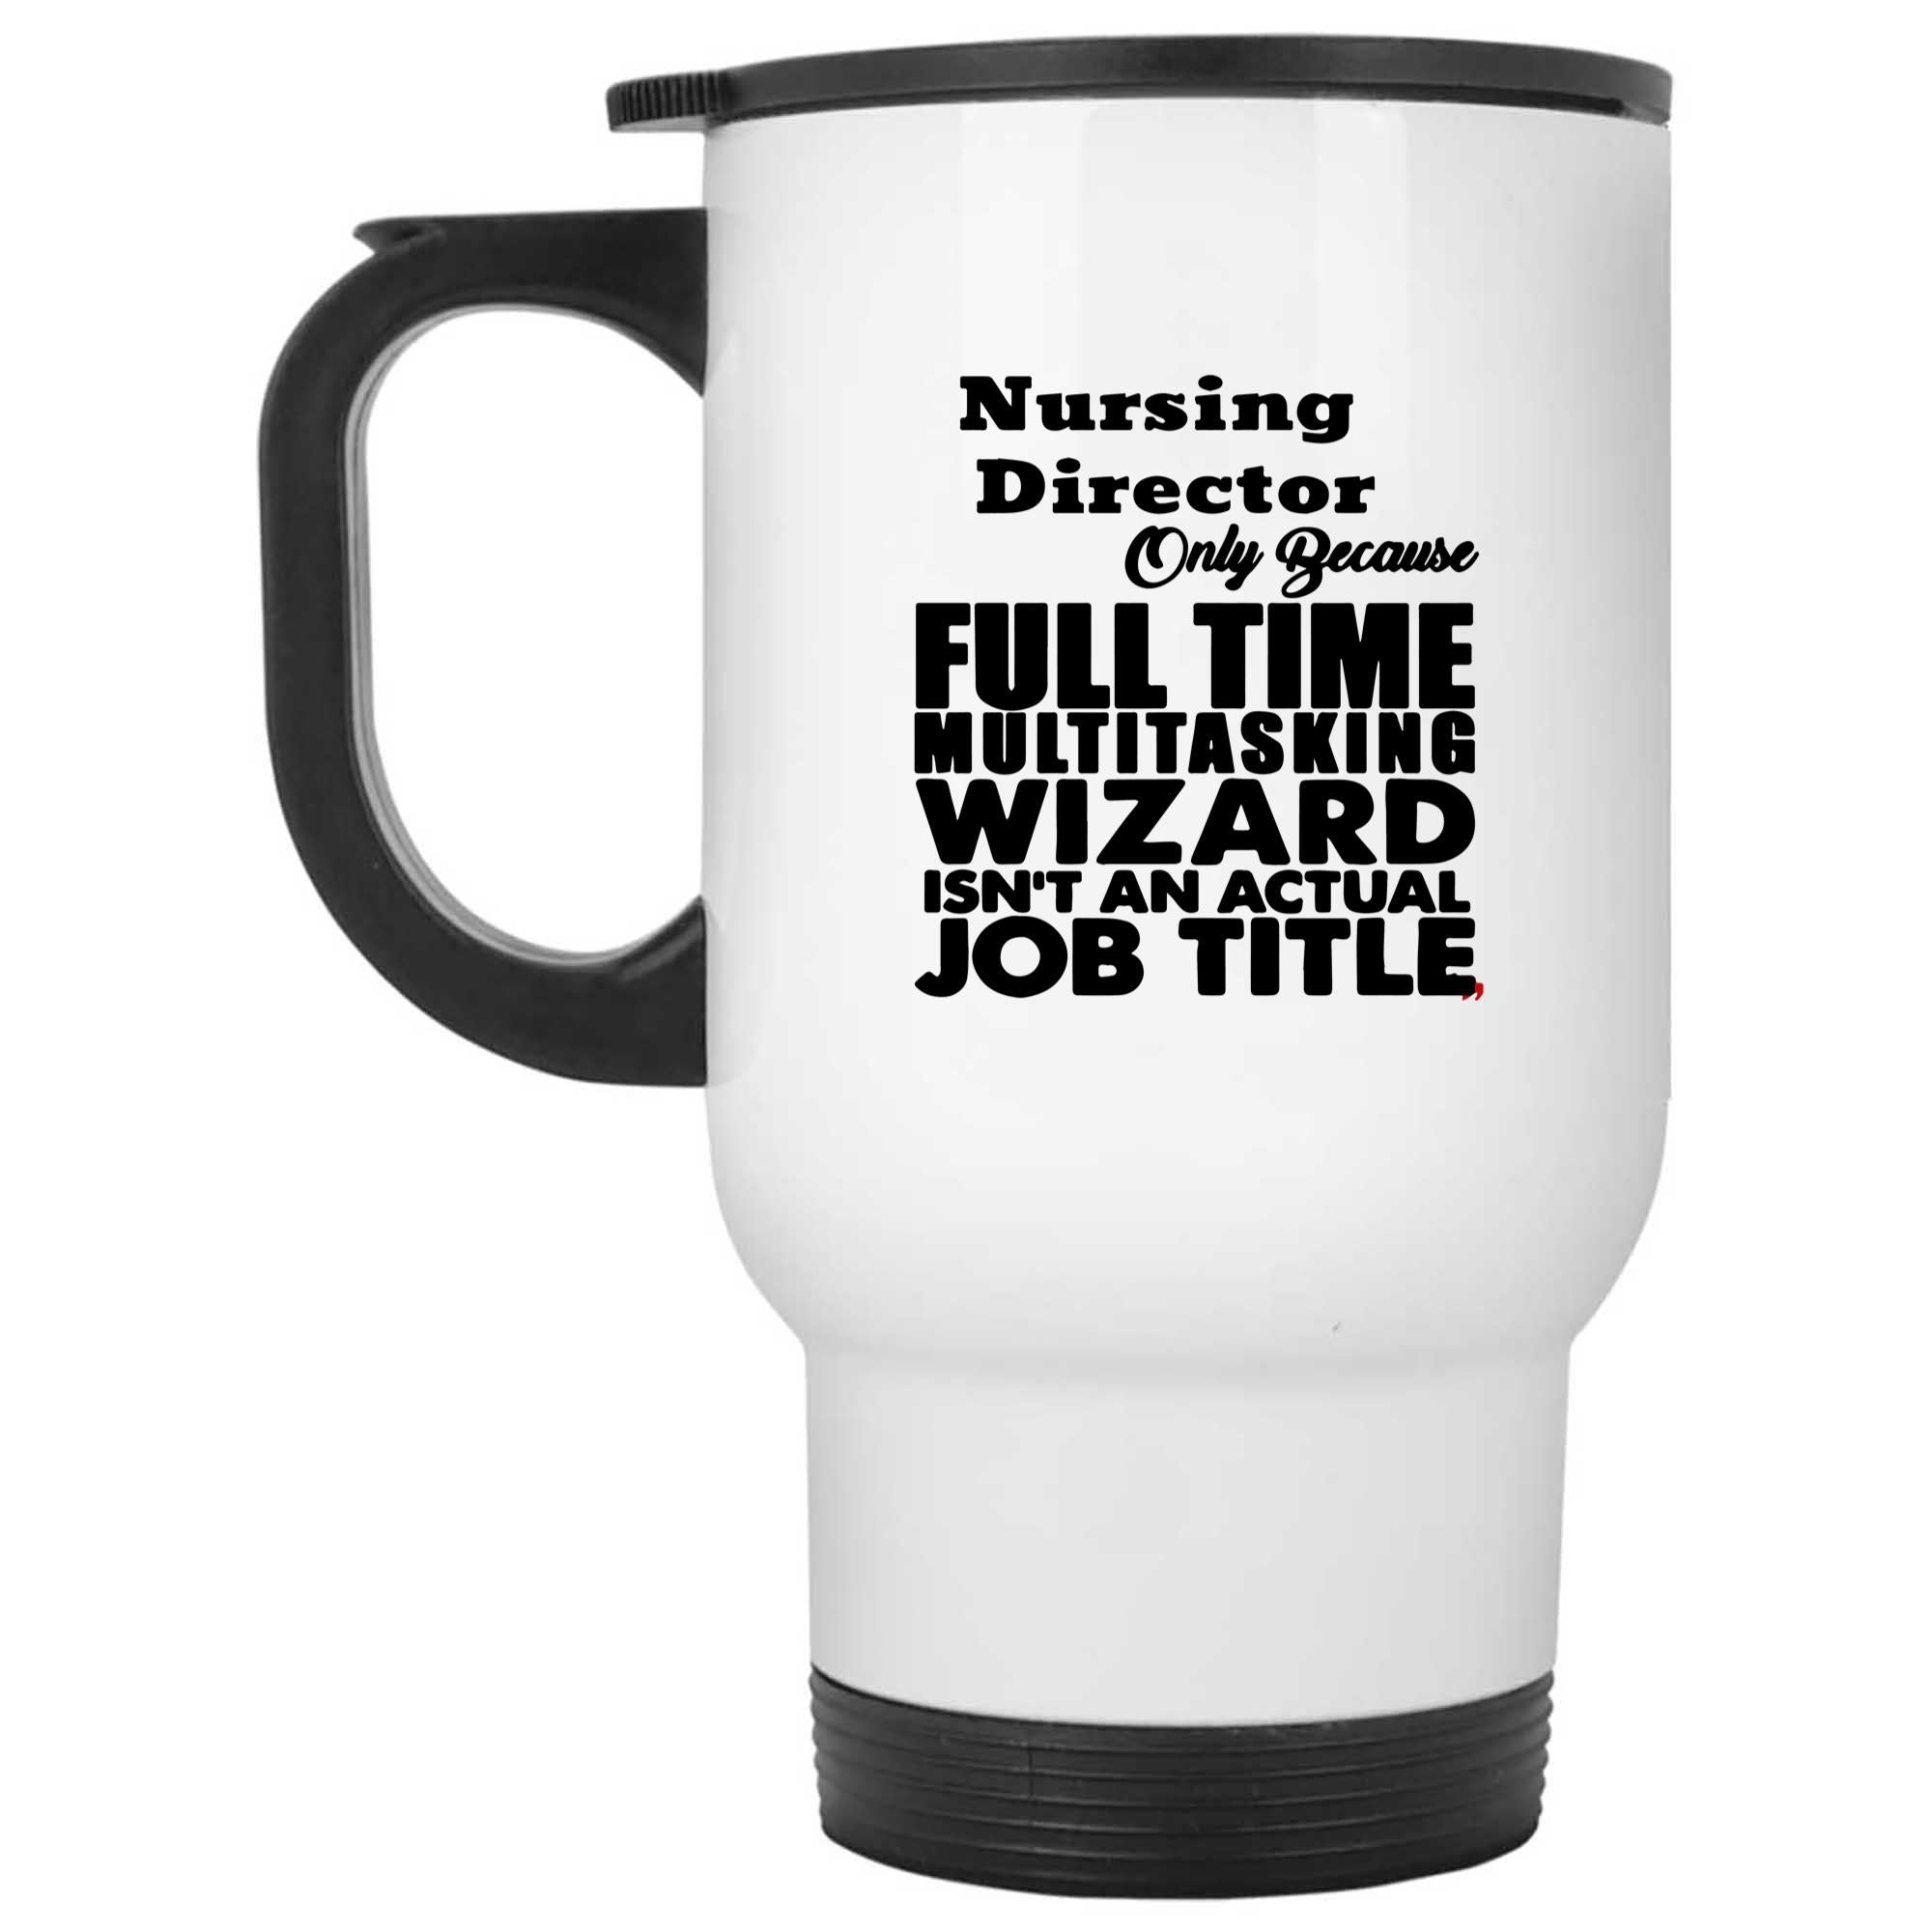 Skitongifts Funny Ceramic Novelty Coffee Mug Best Nursing Director Nurse Doctor Assistant Health Care Funny For Coworker Zb2DdaT